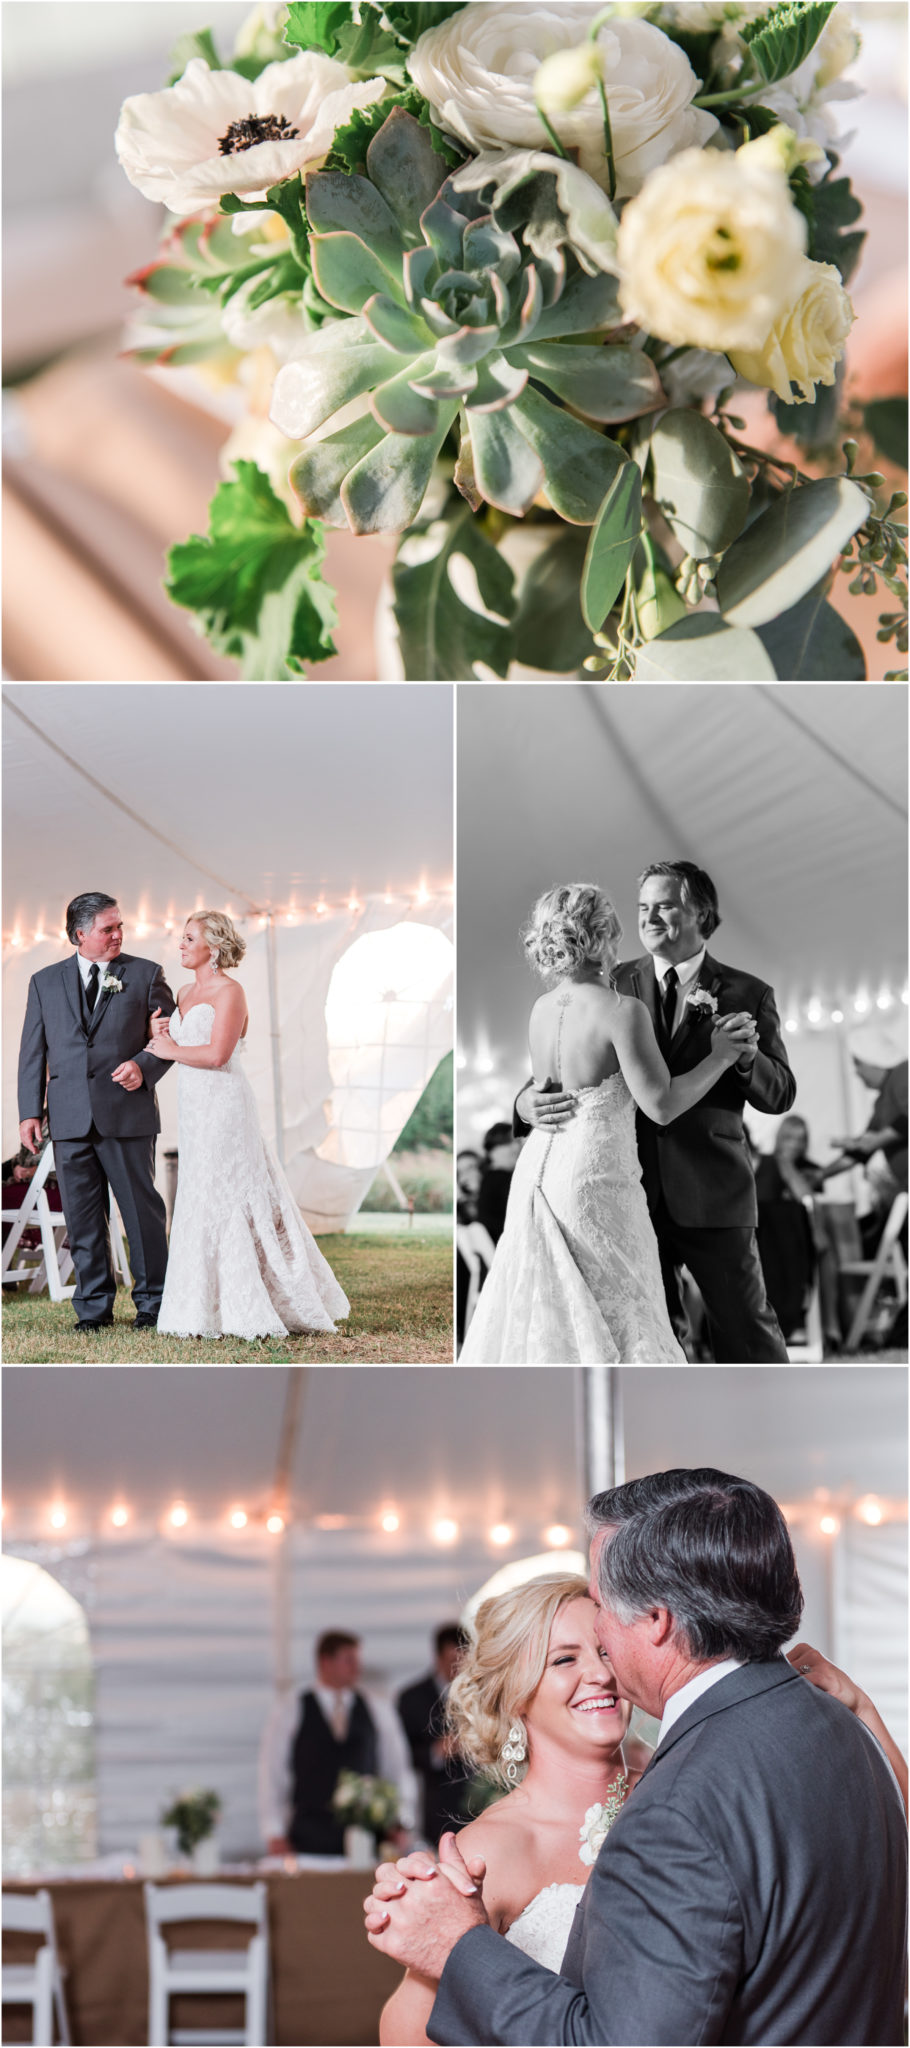 An Ellery Farms Wedding in Woodruff South Carolina father daughter dance photos